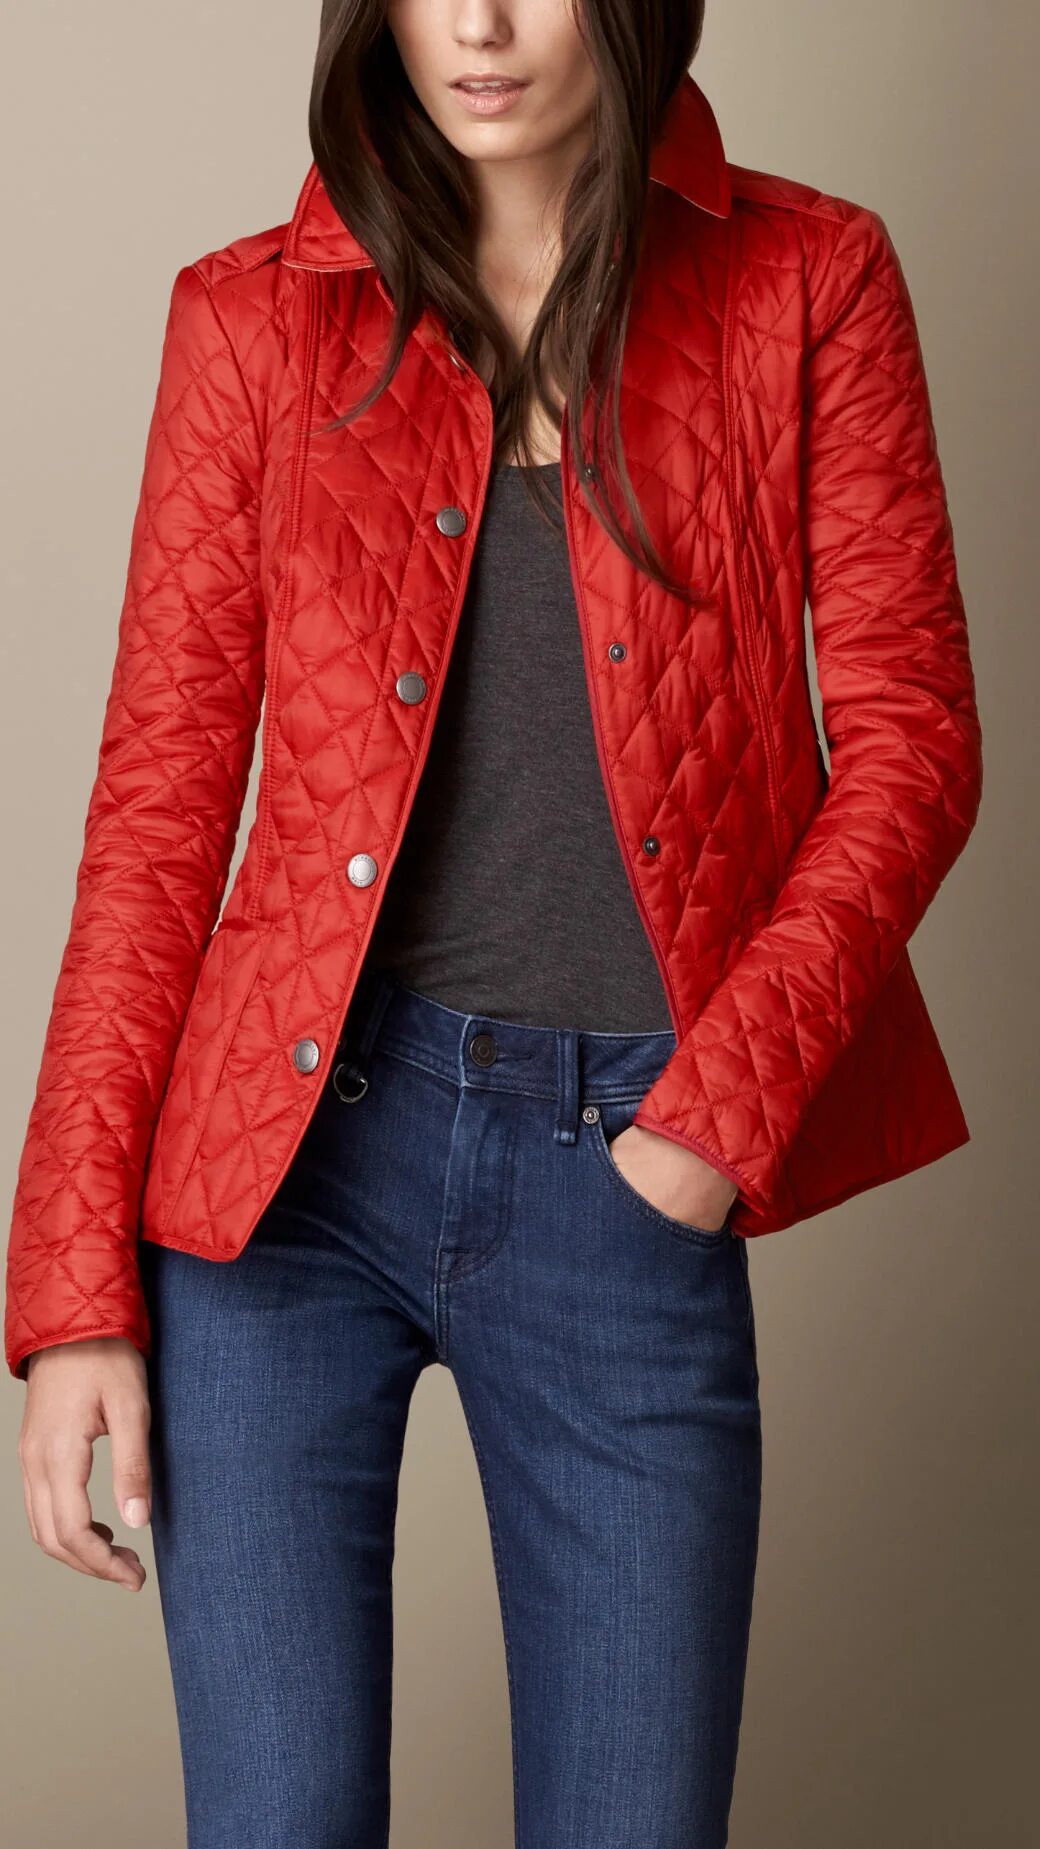 Burberry Quilted Jacket women. Куртка стеганая Burberry женская красная. Куртка Барбери женская красная. Легкая стеганая куртка женская. Стеганая куртка с поясом